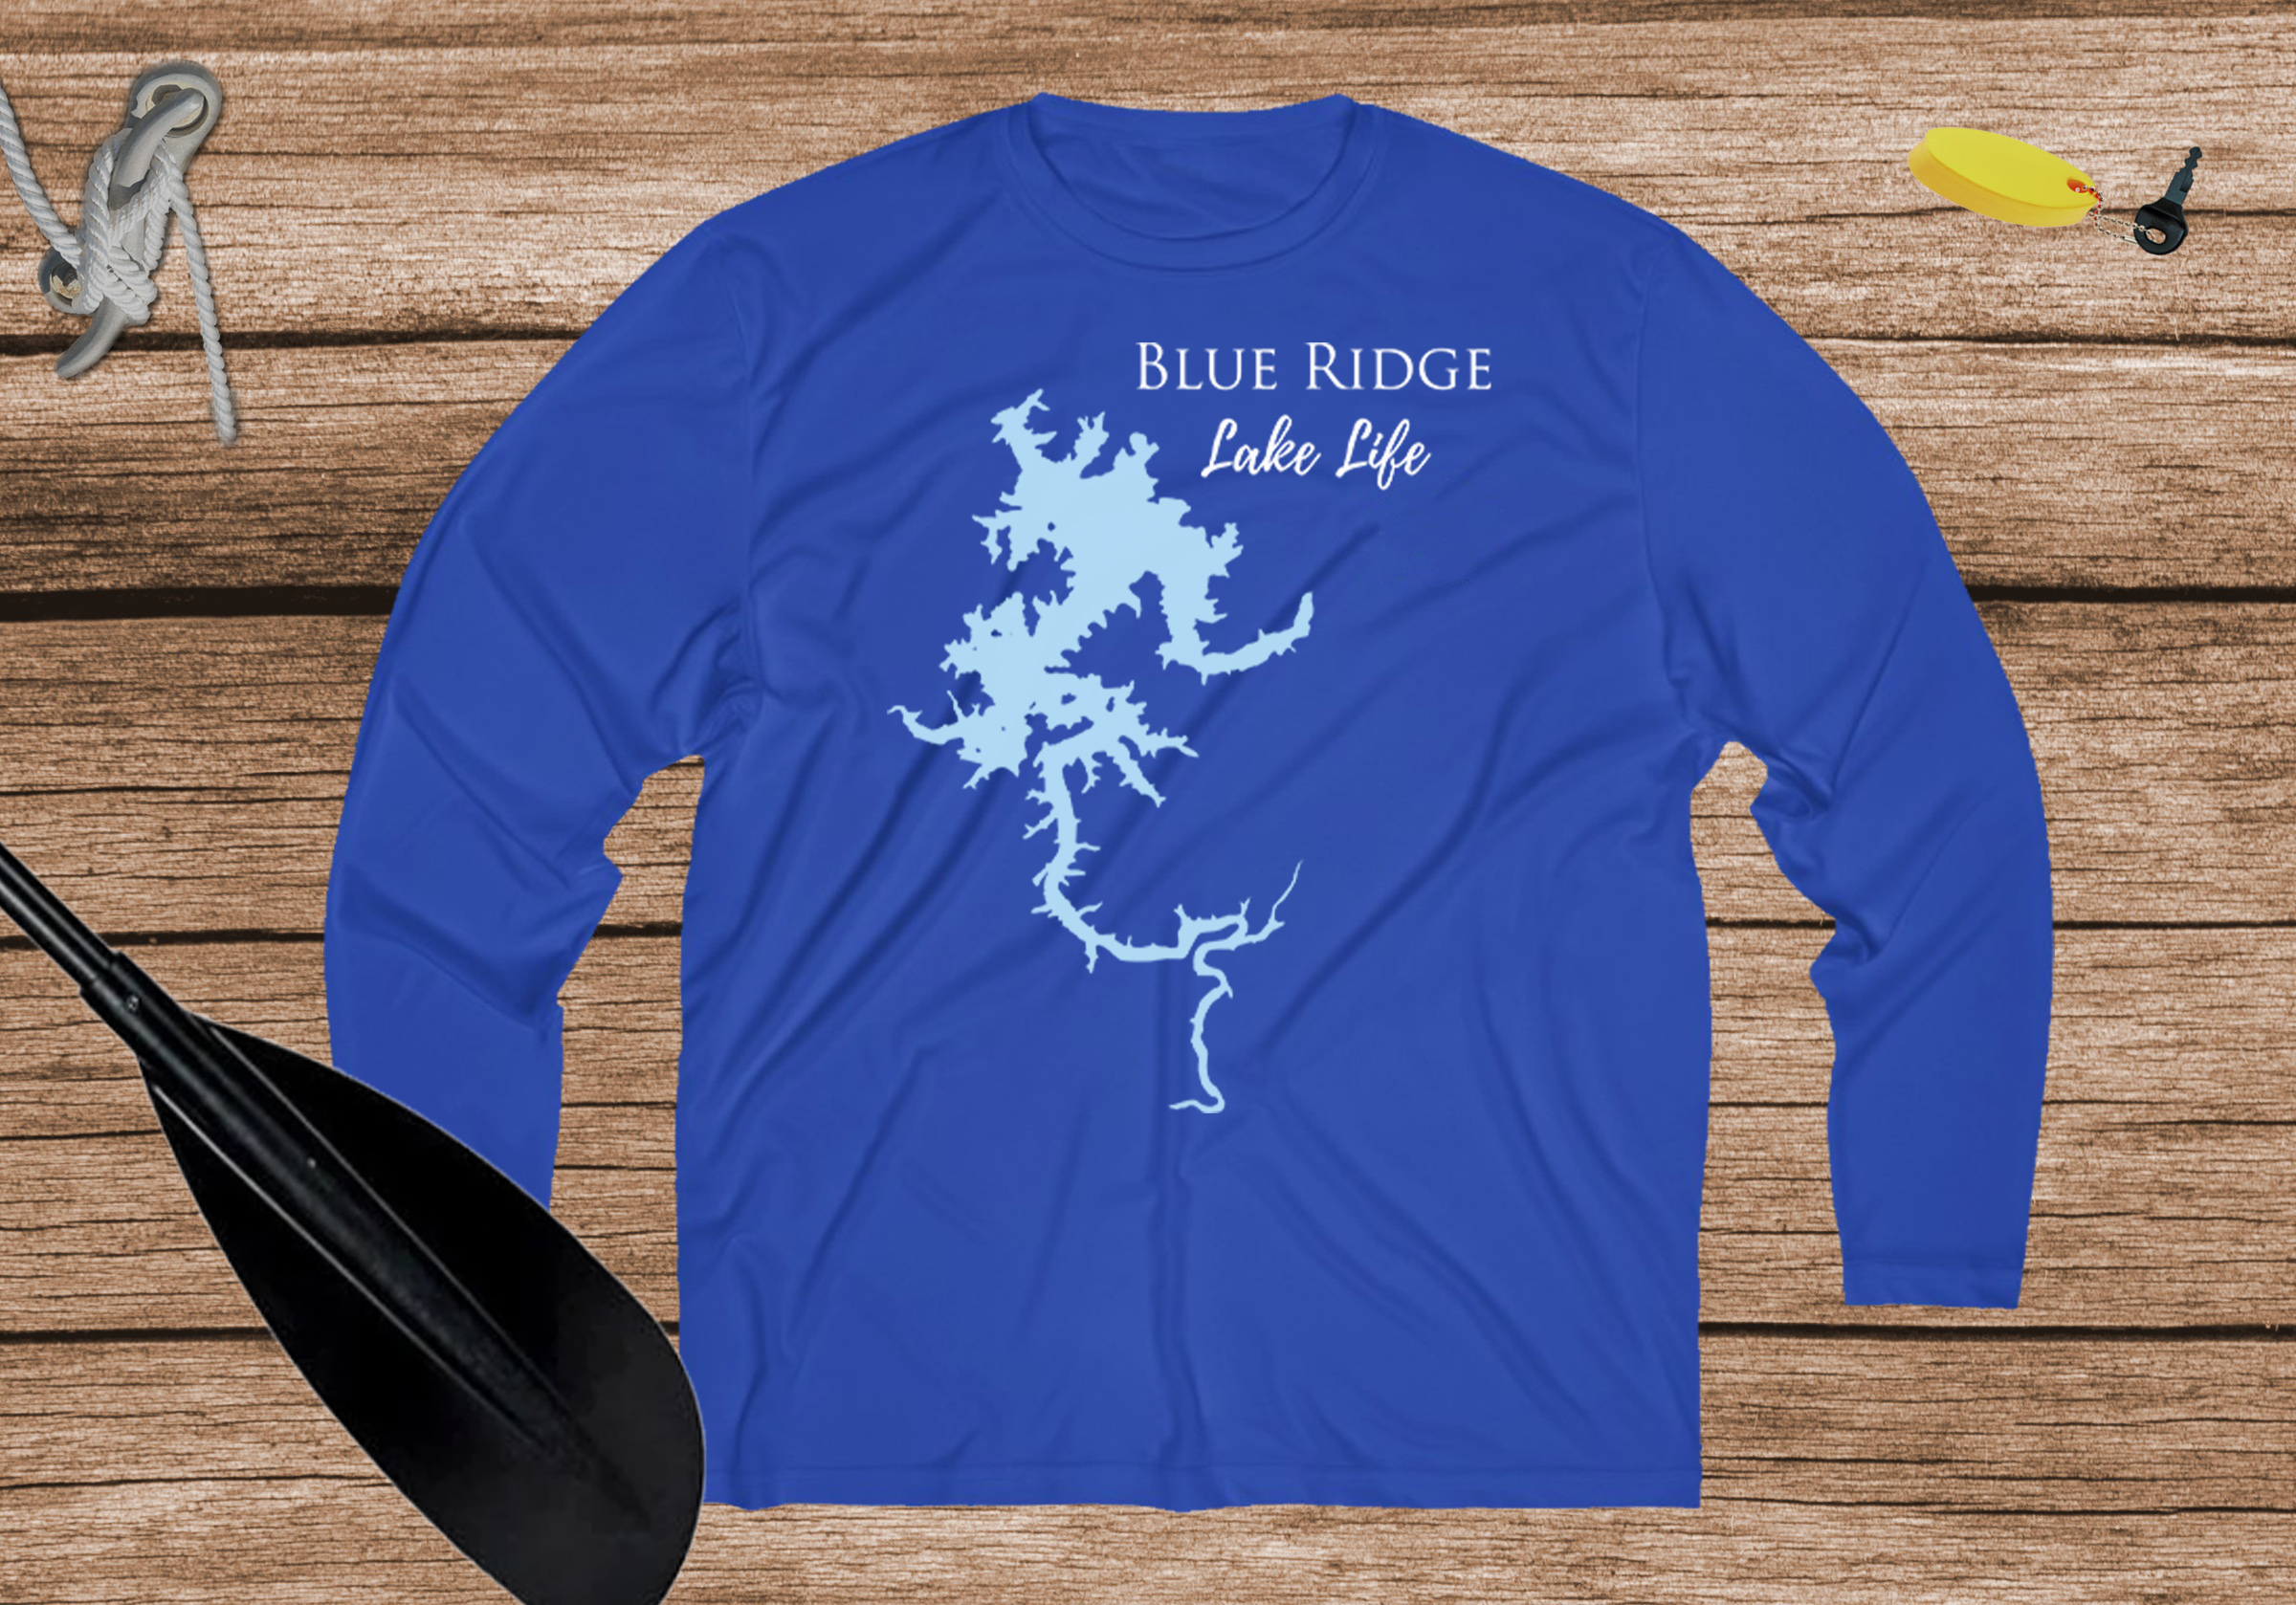 Blue Ridge Lake Life Dri-fit Boating Shirt - Breathable Material- Men's Long Sleeve Moisture Wicking Tee - Georgia Lake